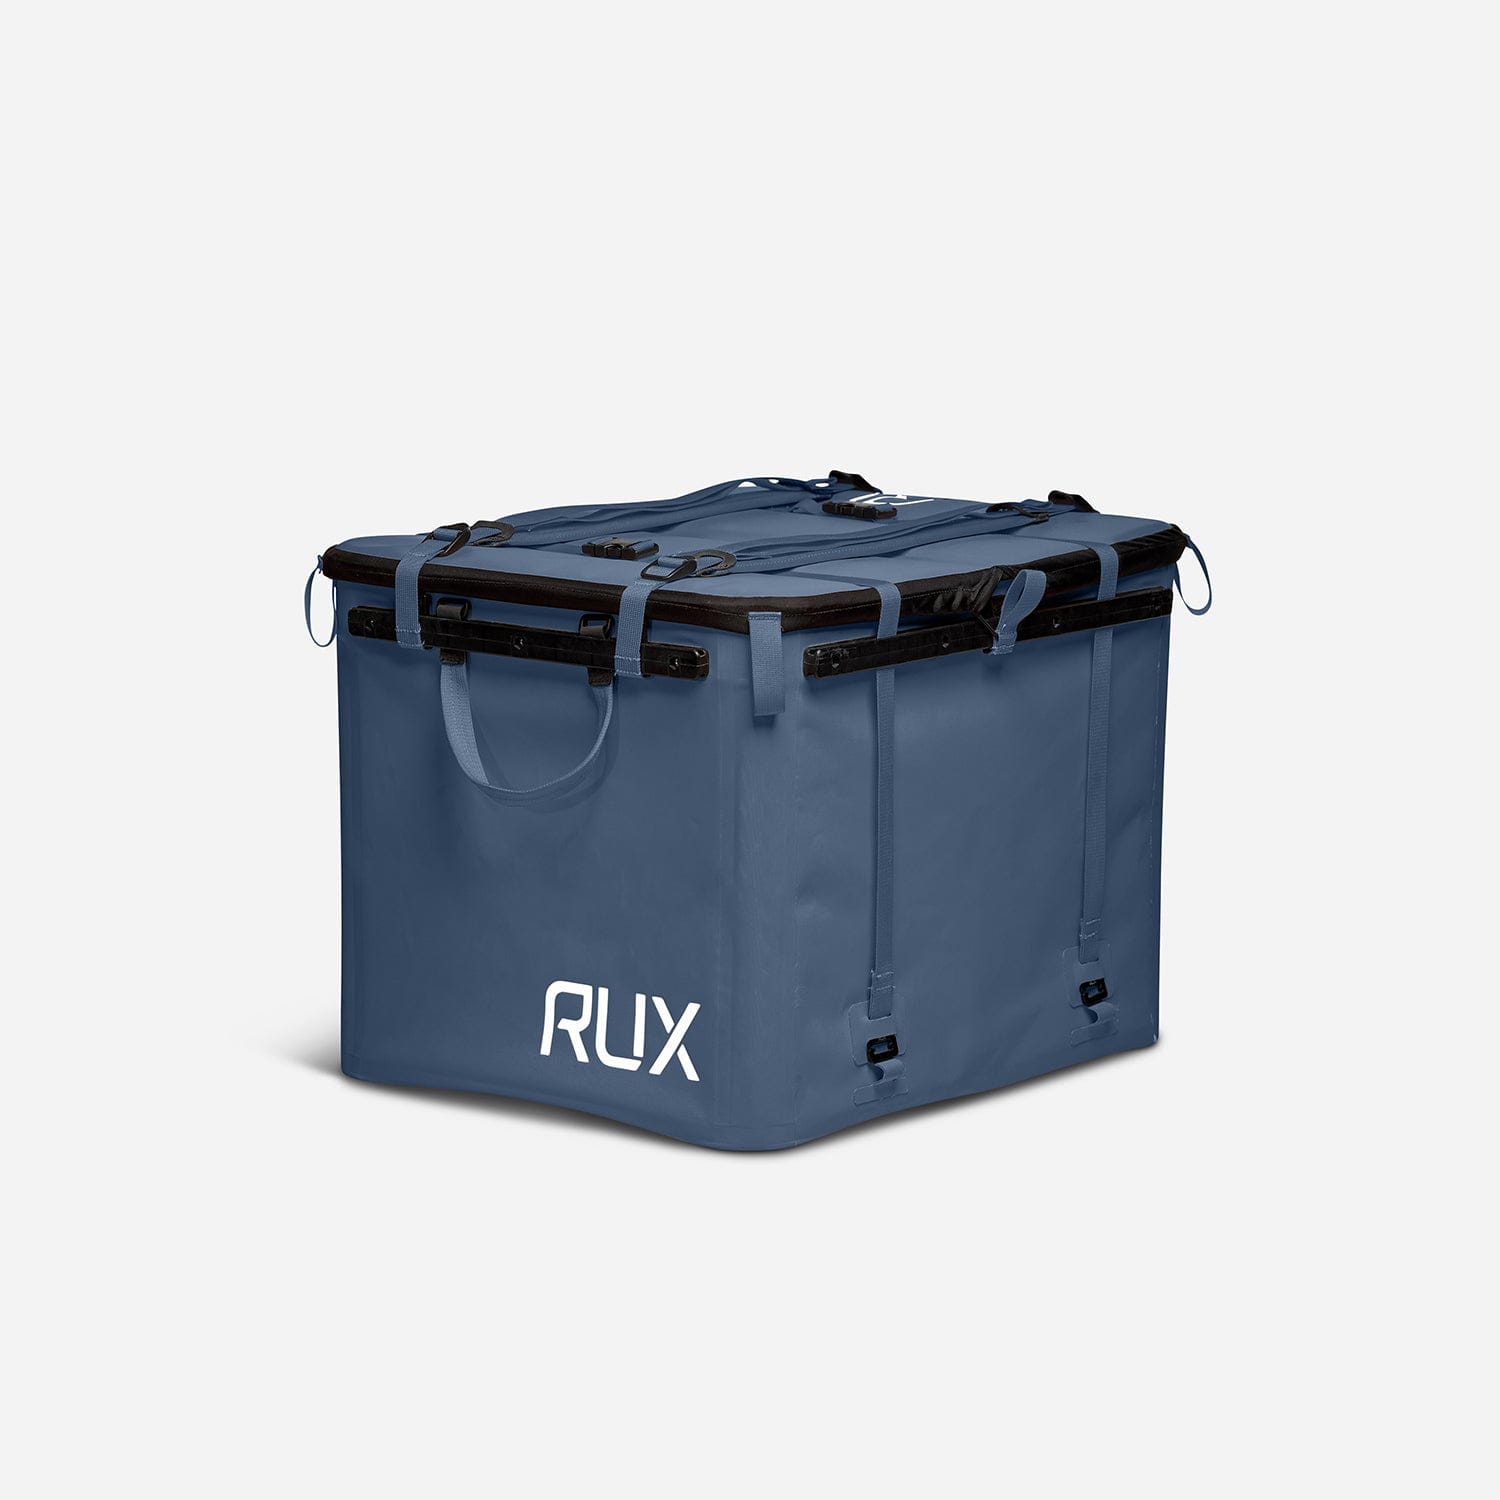 Blue RUX 70L gear hauler